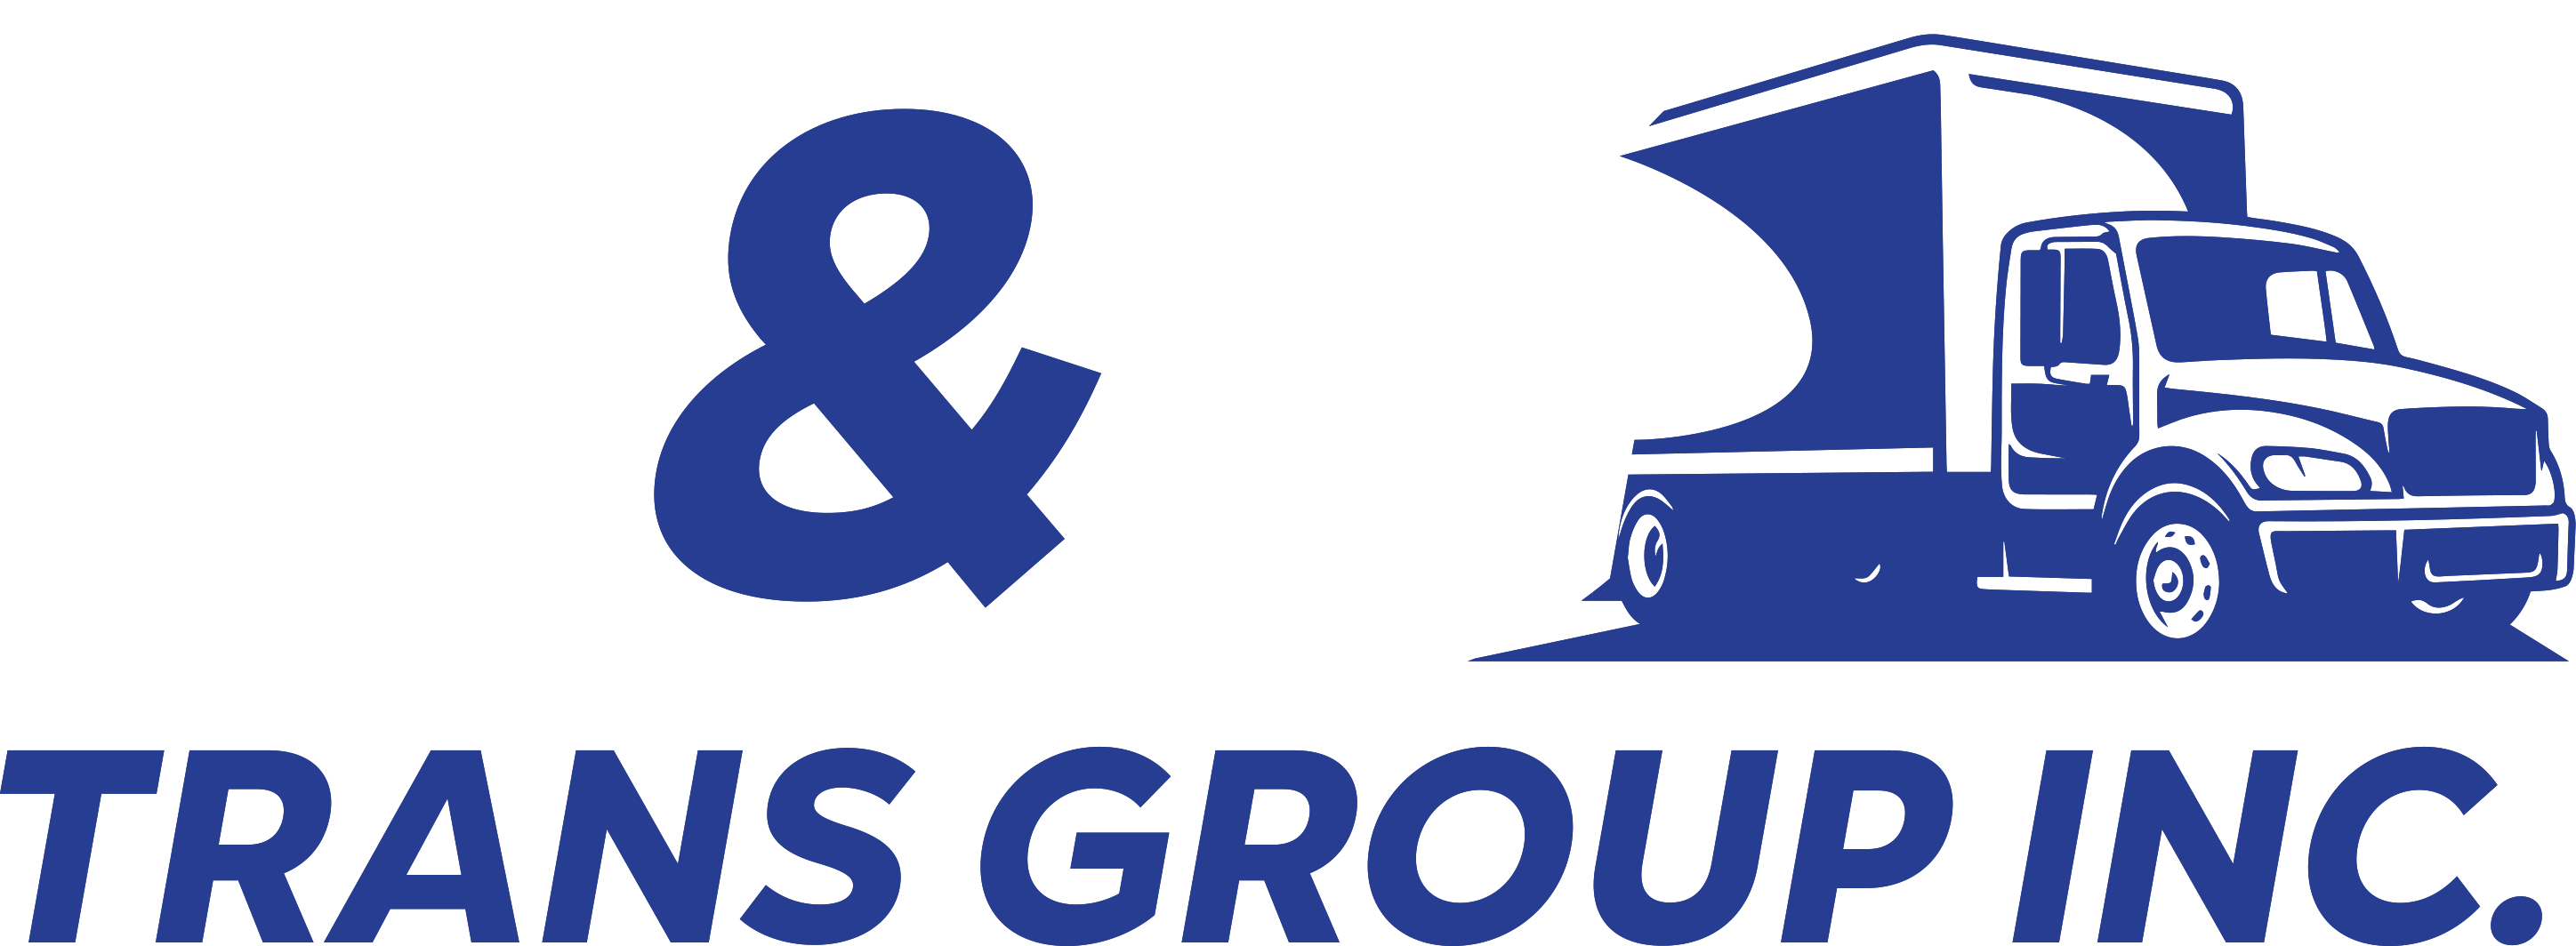 M&G Trans Group